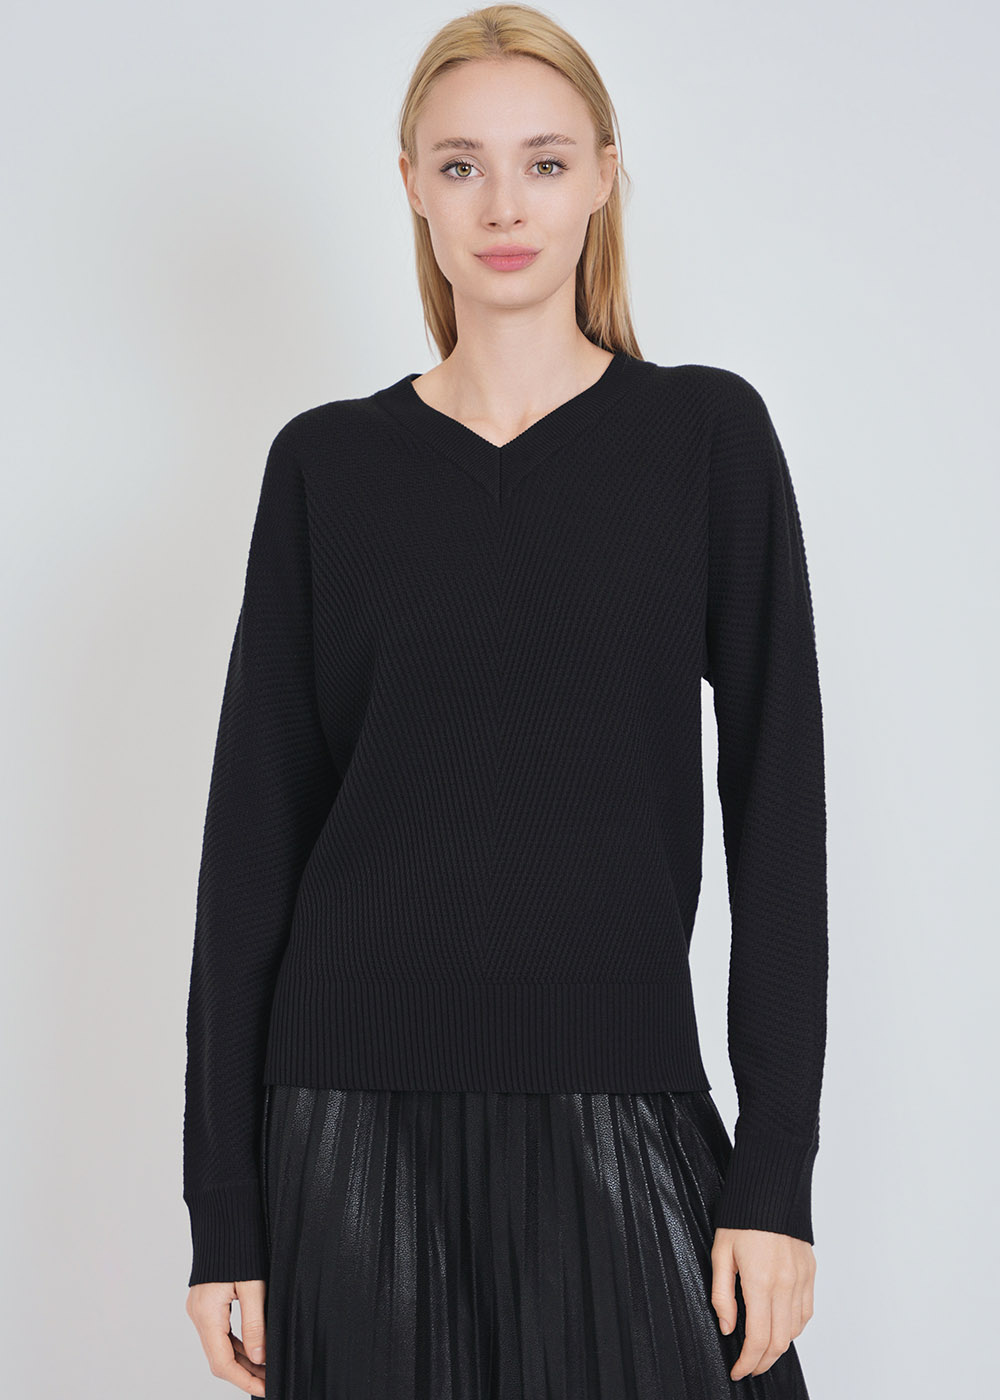 Stylish Black V-Neck Sweater in Ribbed Knit